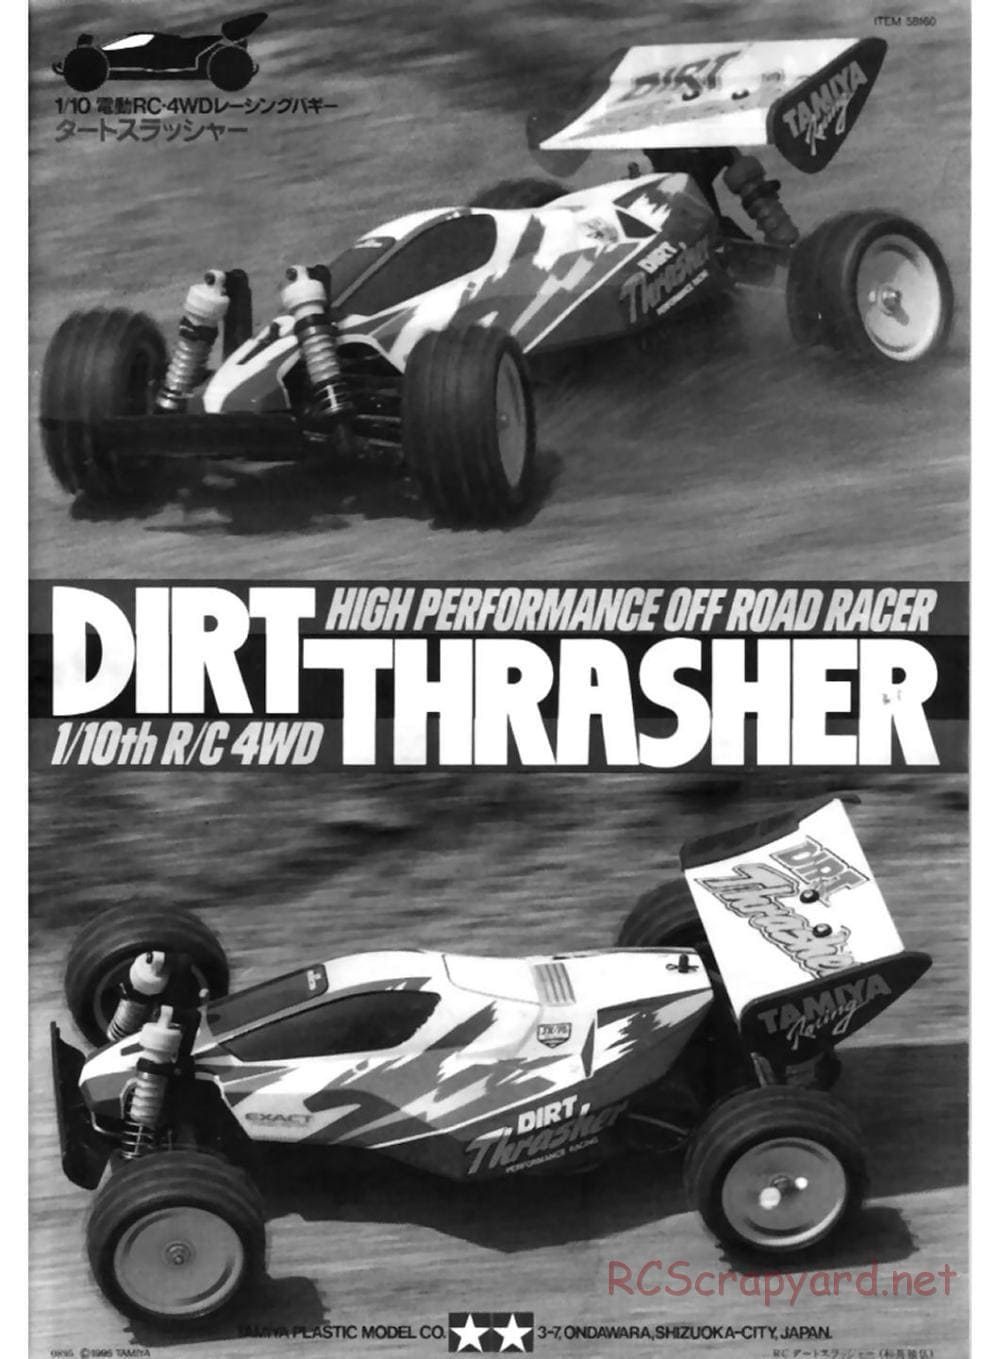 Tamiya - Dirt Thrasher Chassis - Manual - Page 1